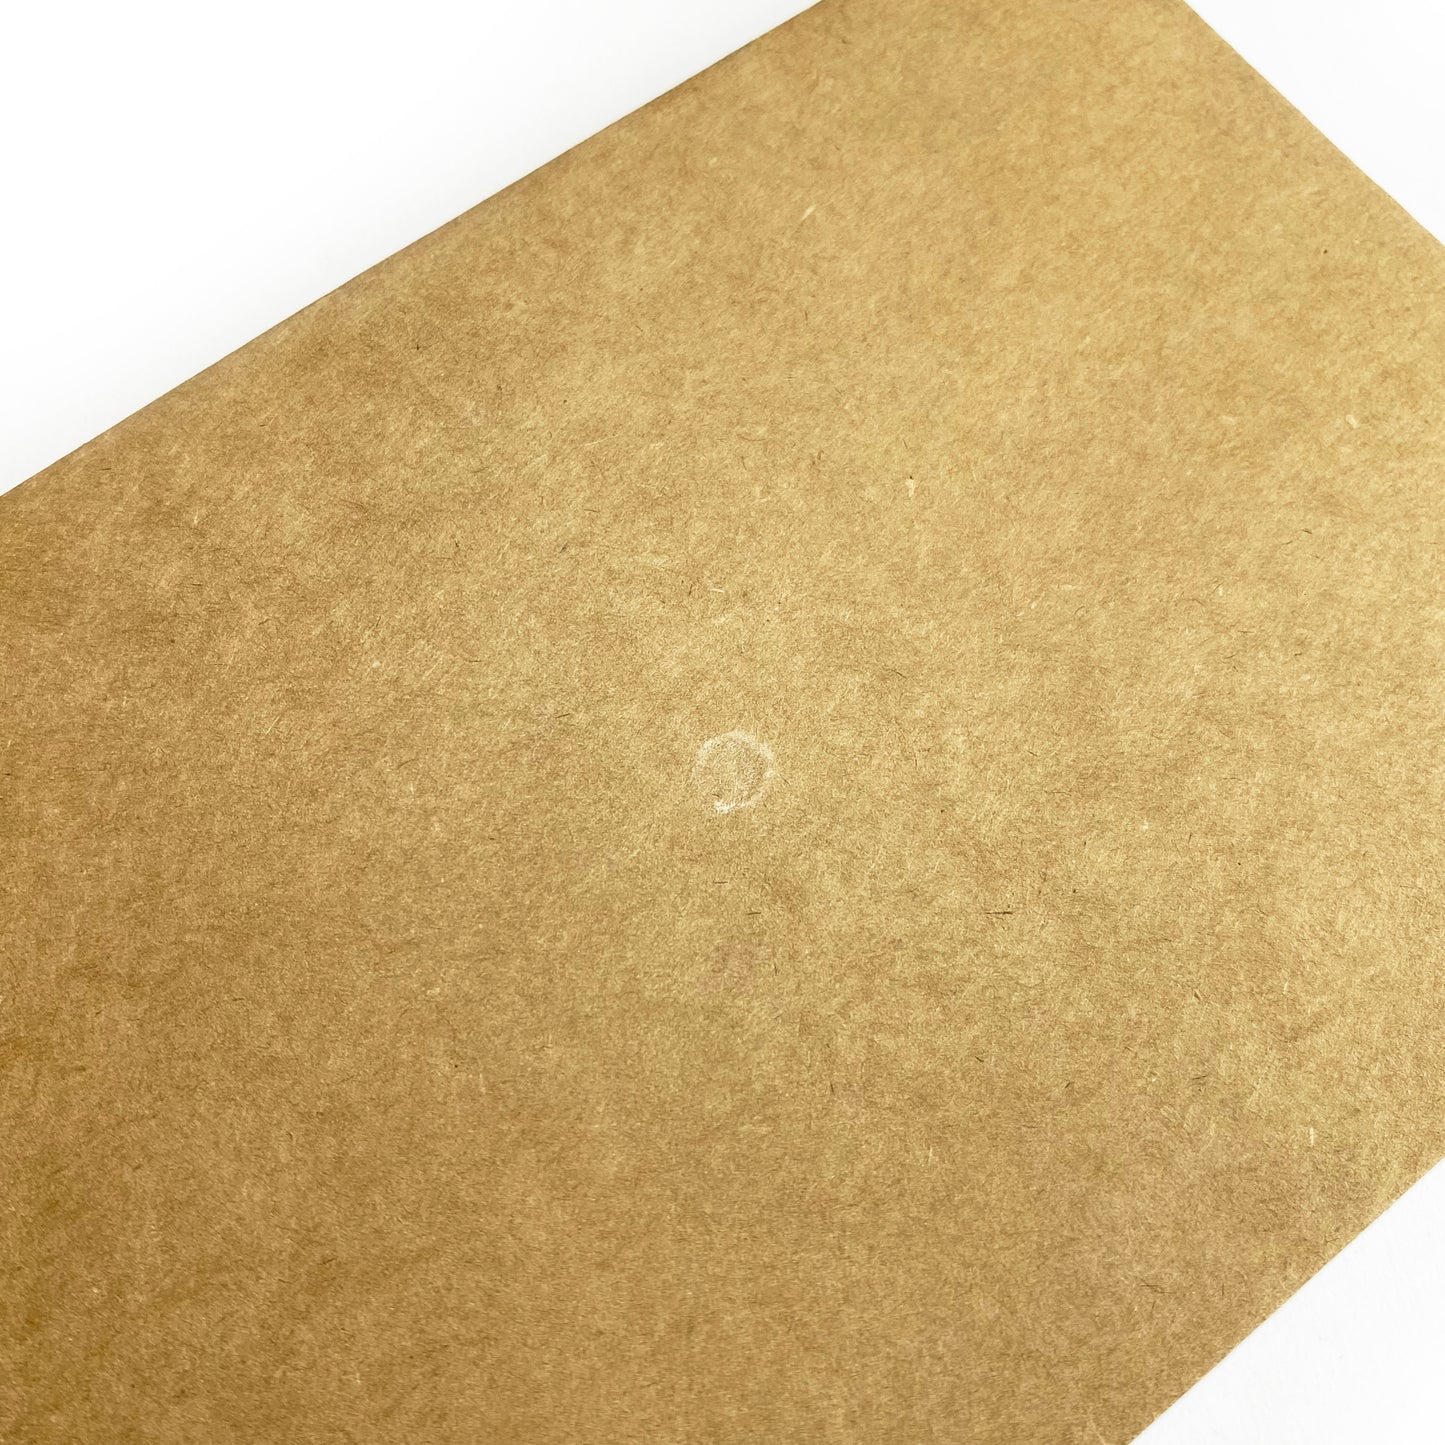 Set of 10 Brown Kraft Washer & String Envelopes - 11.5cm x 17cm - SweetpeaStore